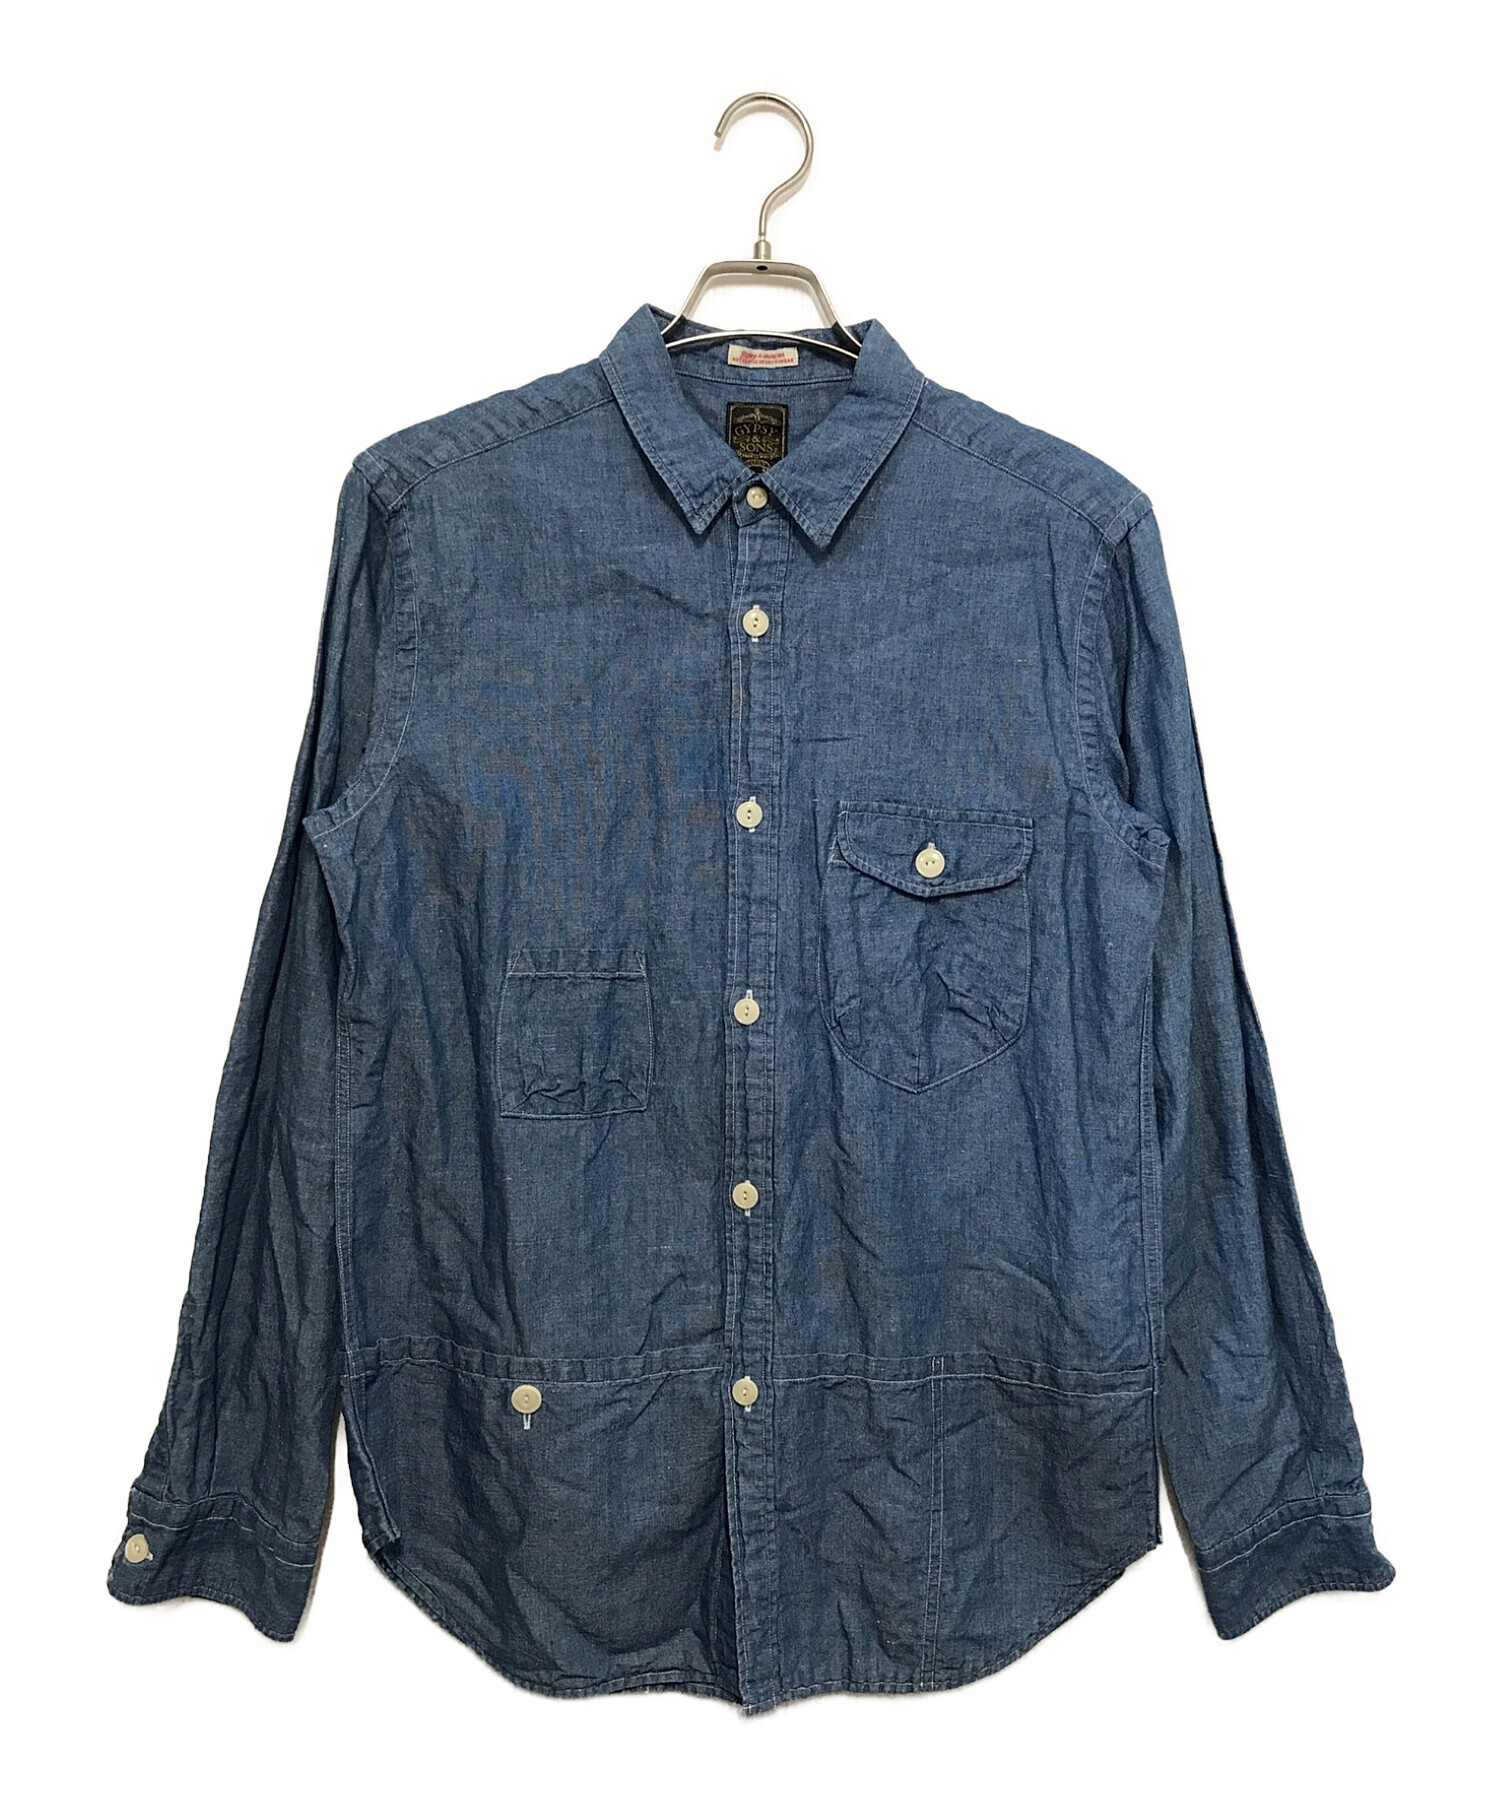 GYPSY & SONS (ジプシーアンドサンズ) ダンガリーワークシャツ ブルー サイズ:1